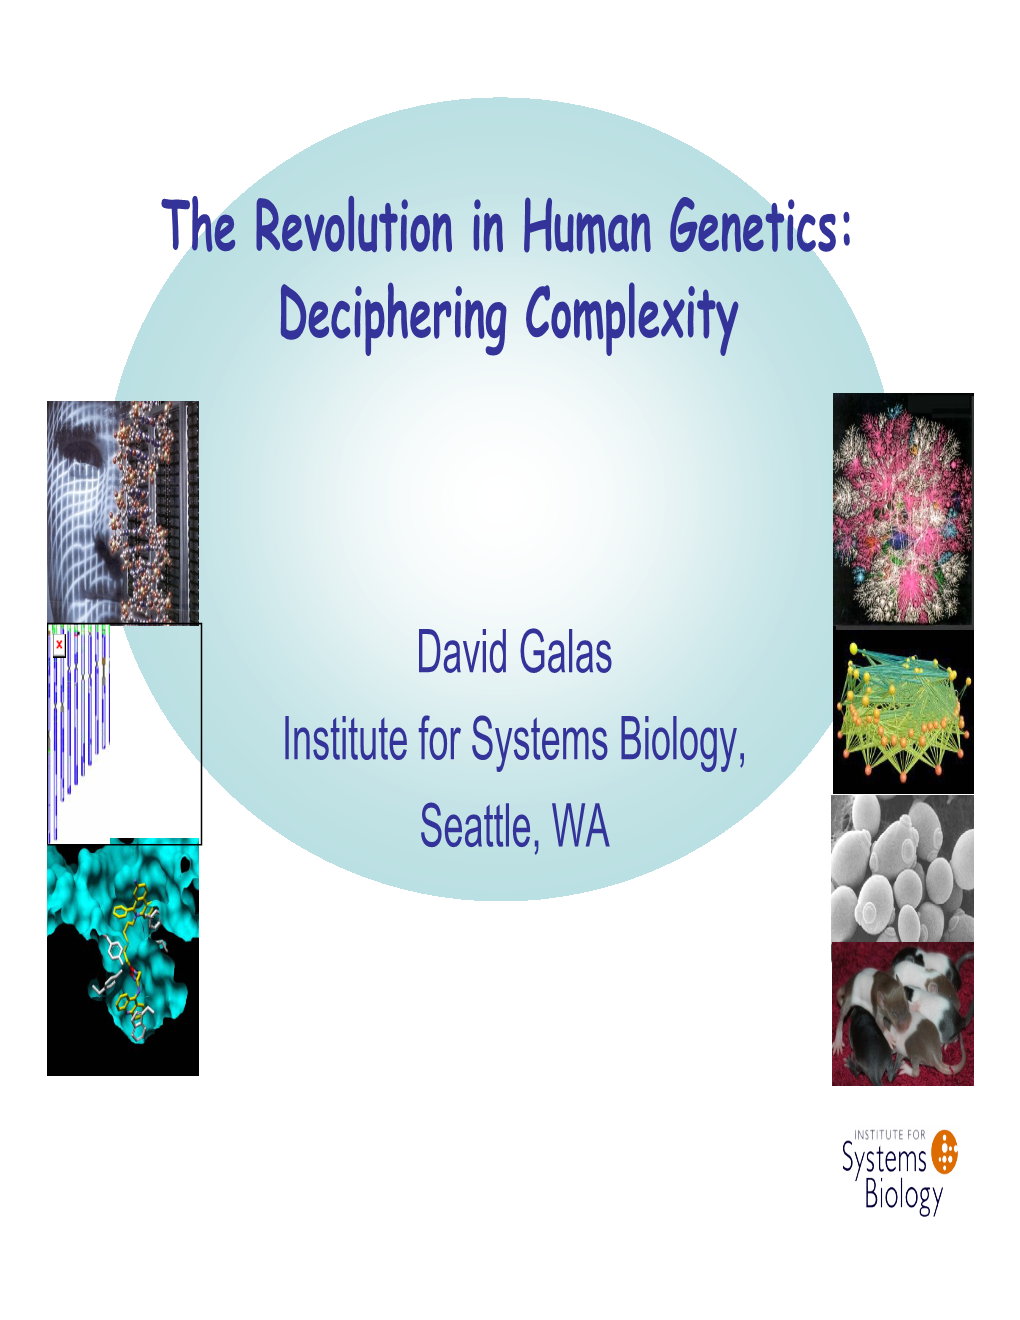 The Revolution in Human Genetics: Deciphering Complexity